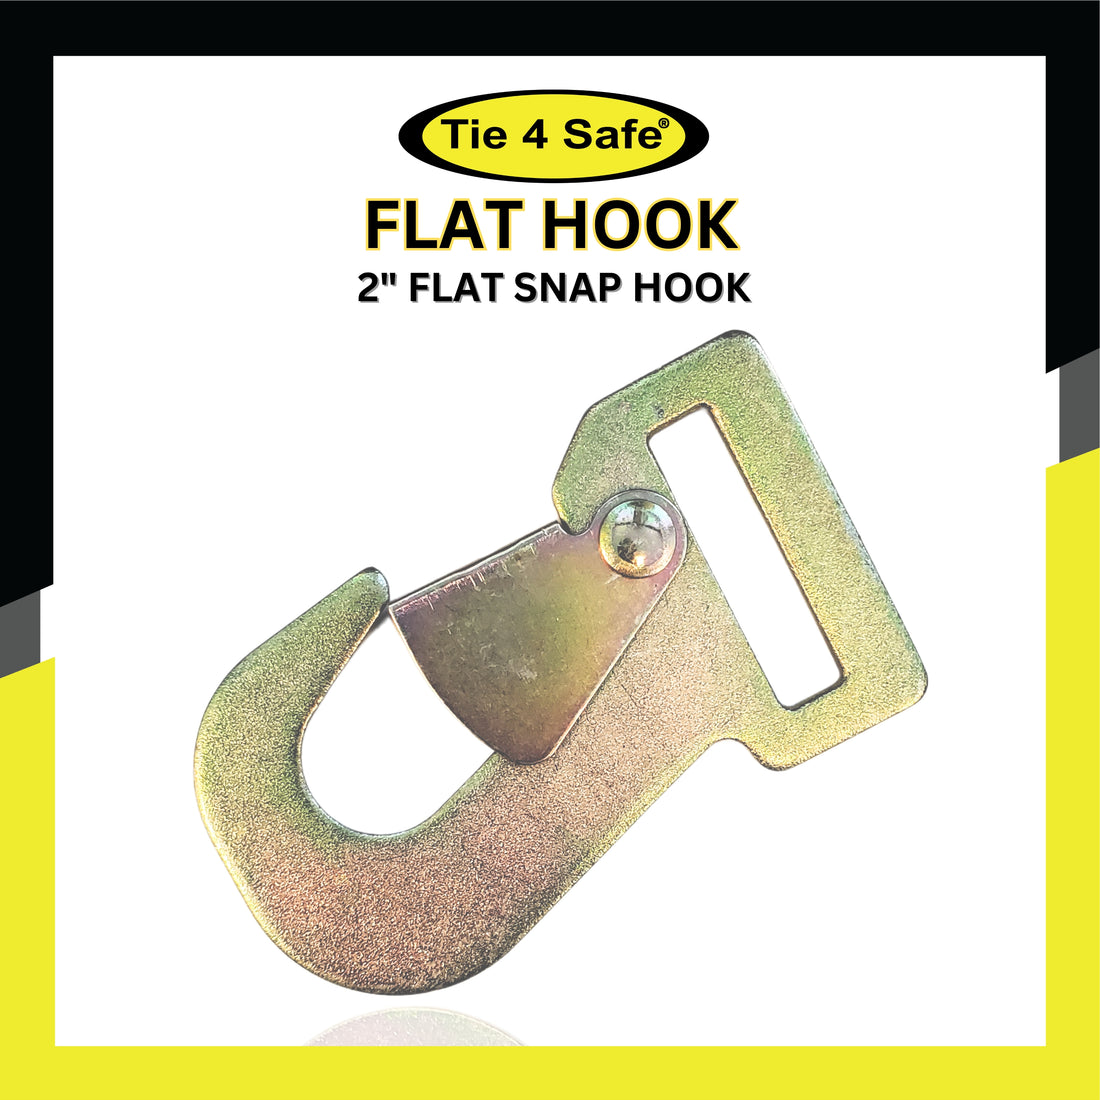 2" Flat Small Snap Hook